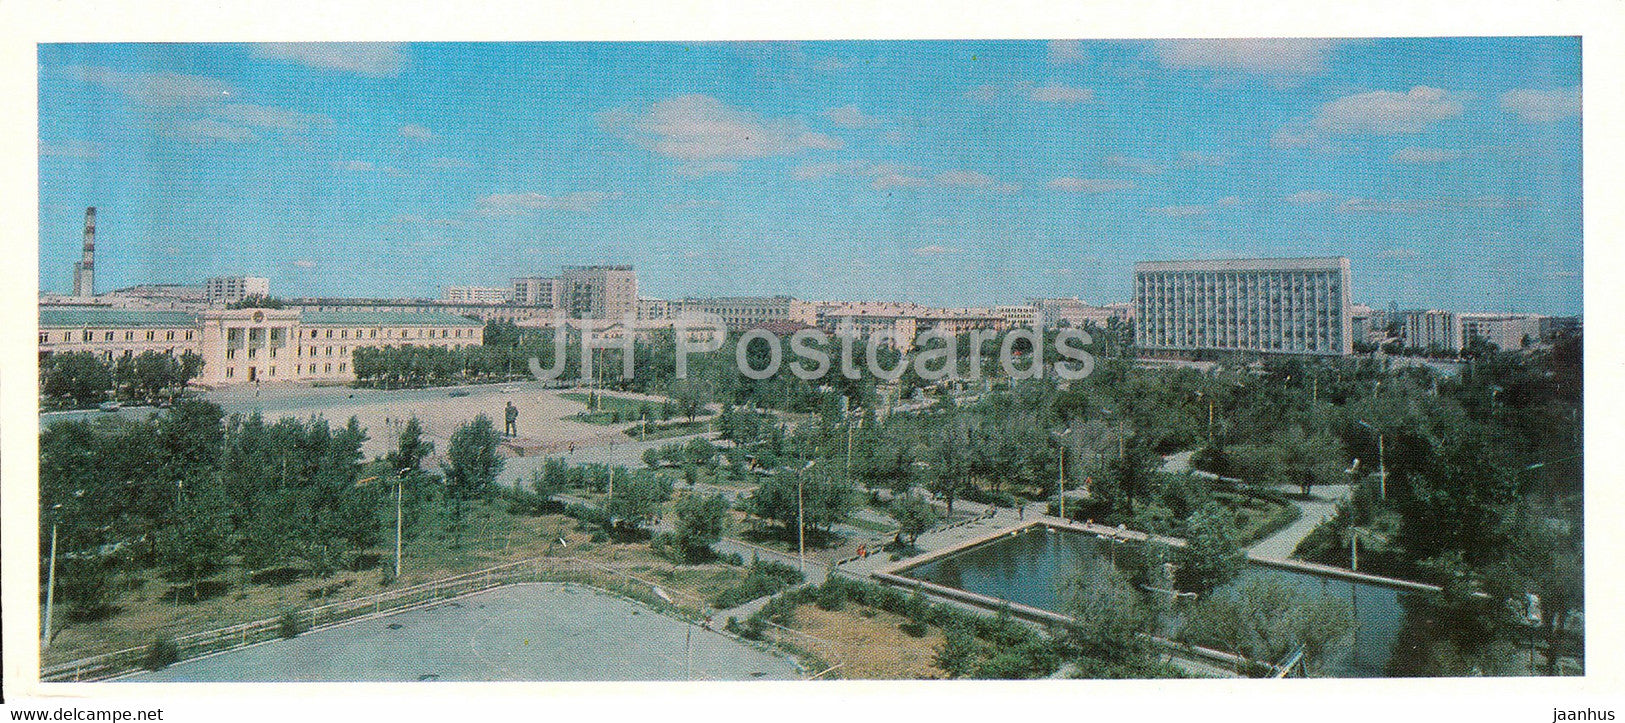 Kostanay - panorama of the city - 1985 - Kazakhstan USSR - unused - JH Postcards